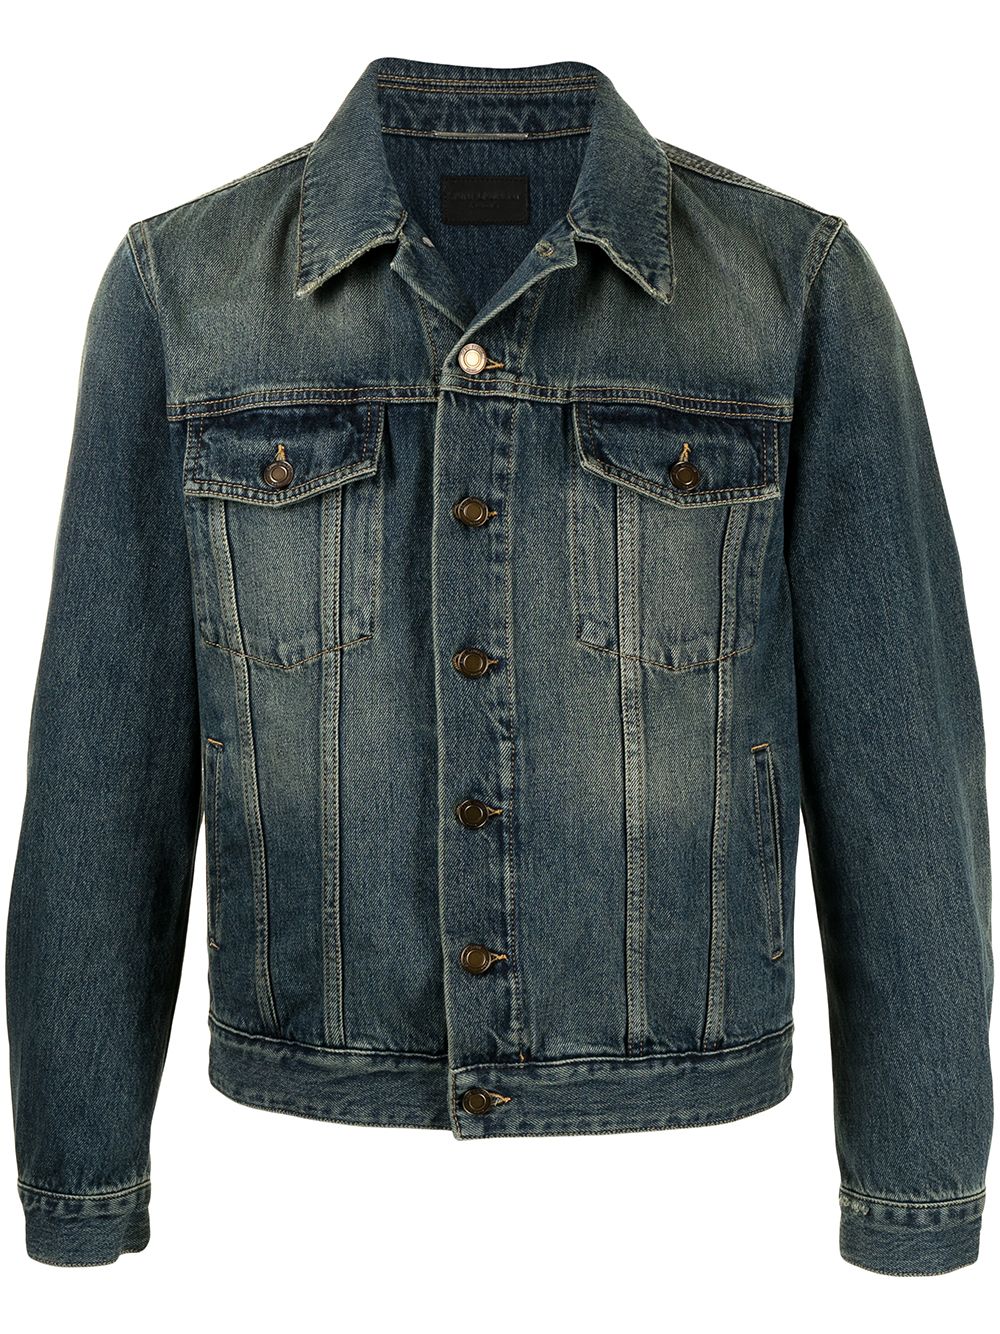 Image 1 of Saint Laurent faded-effect denim jacket